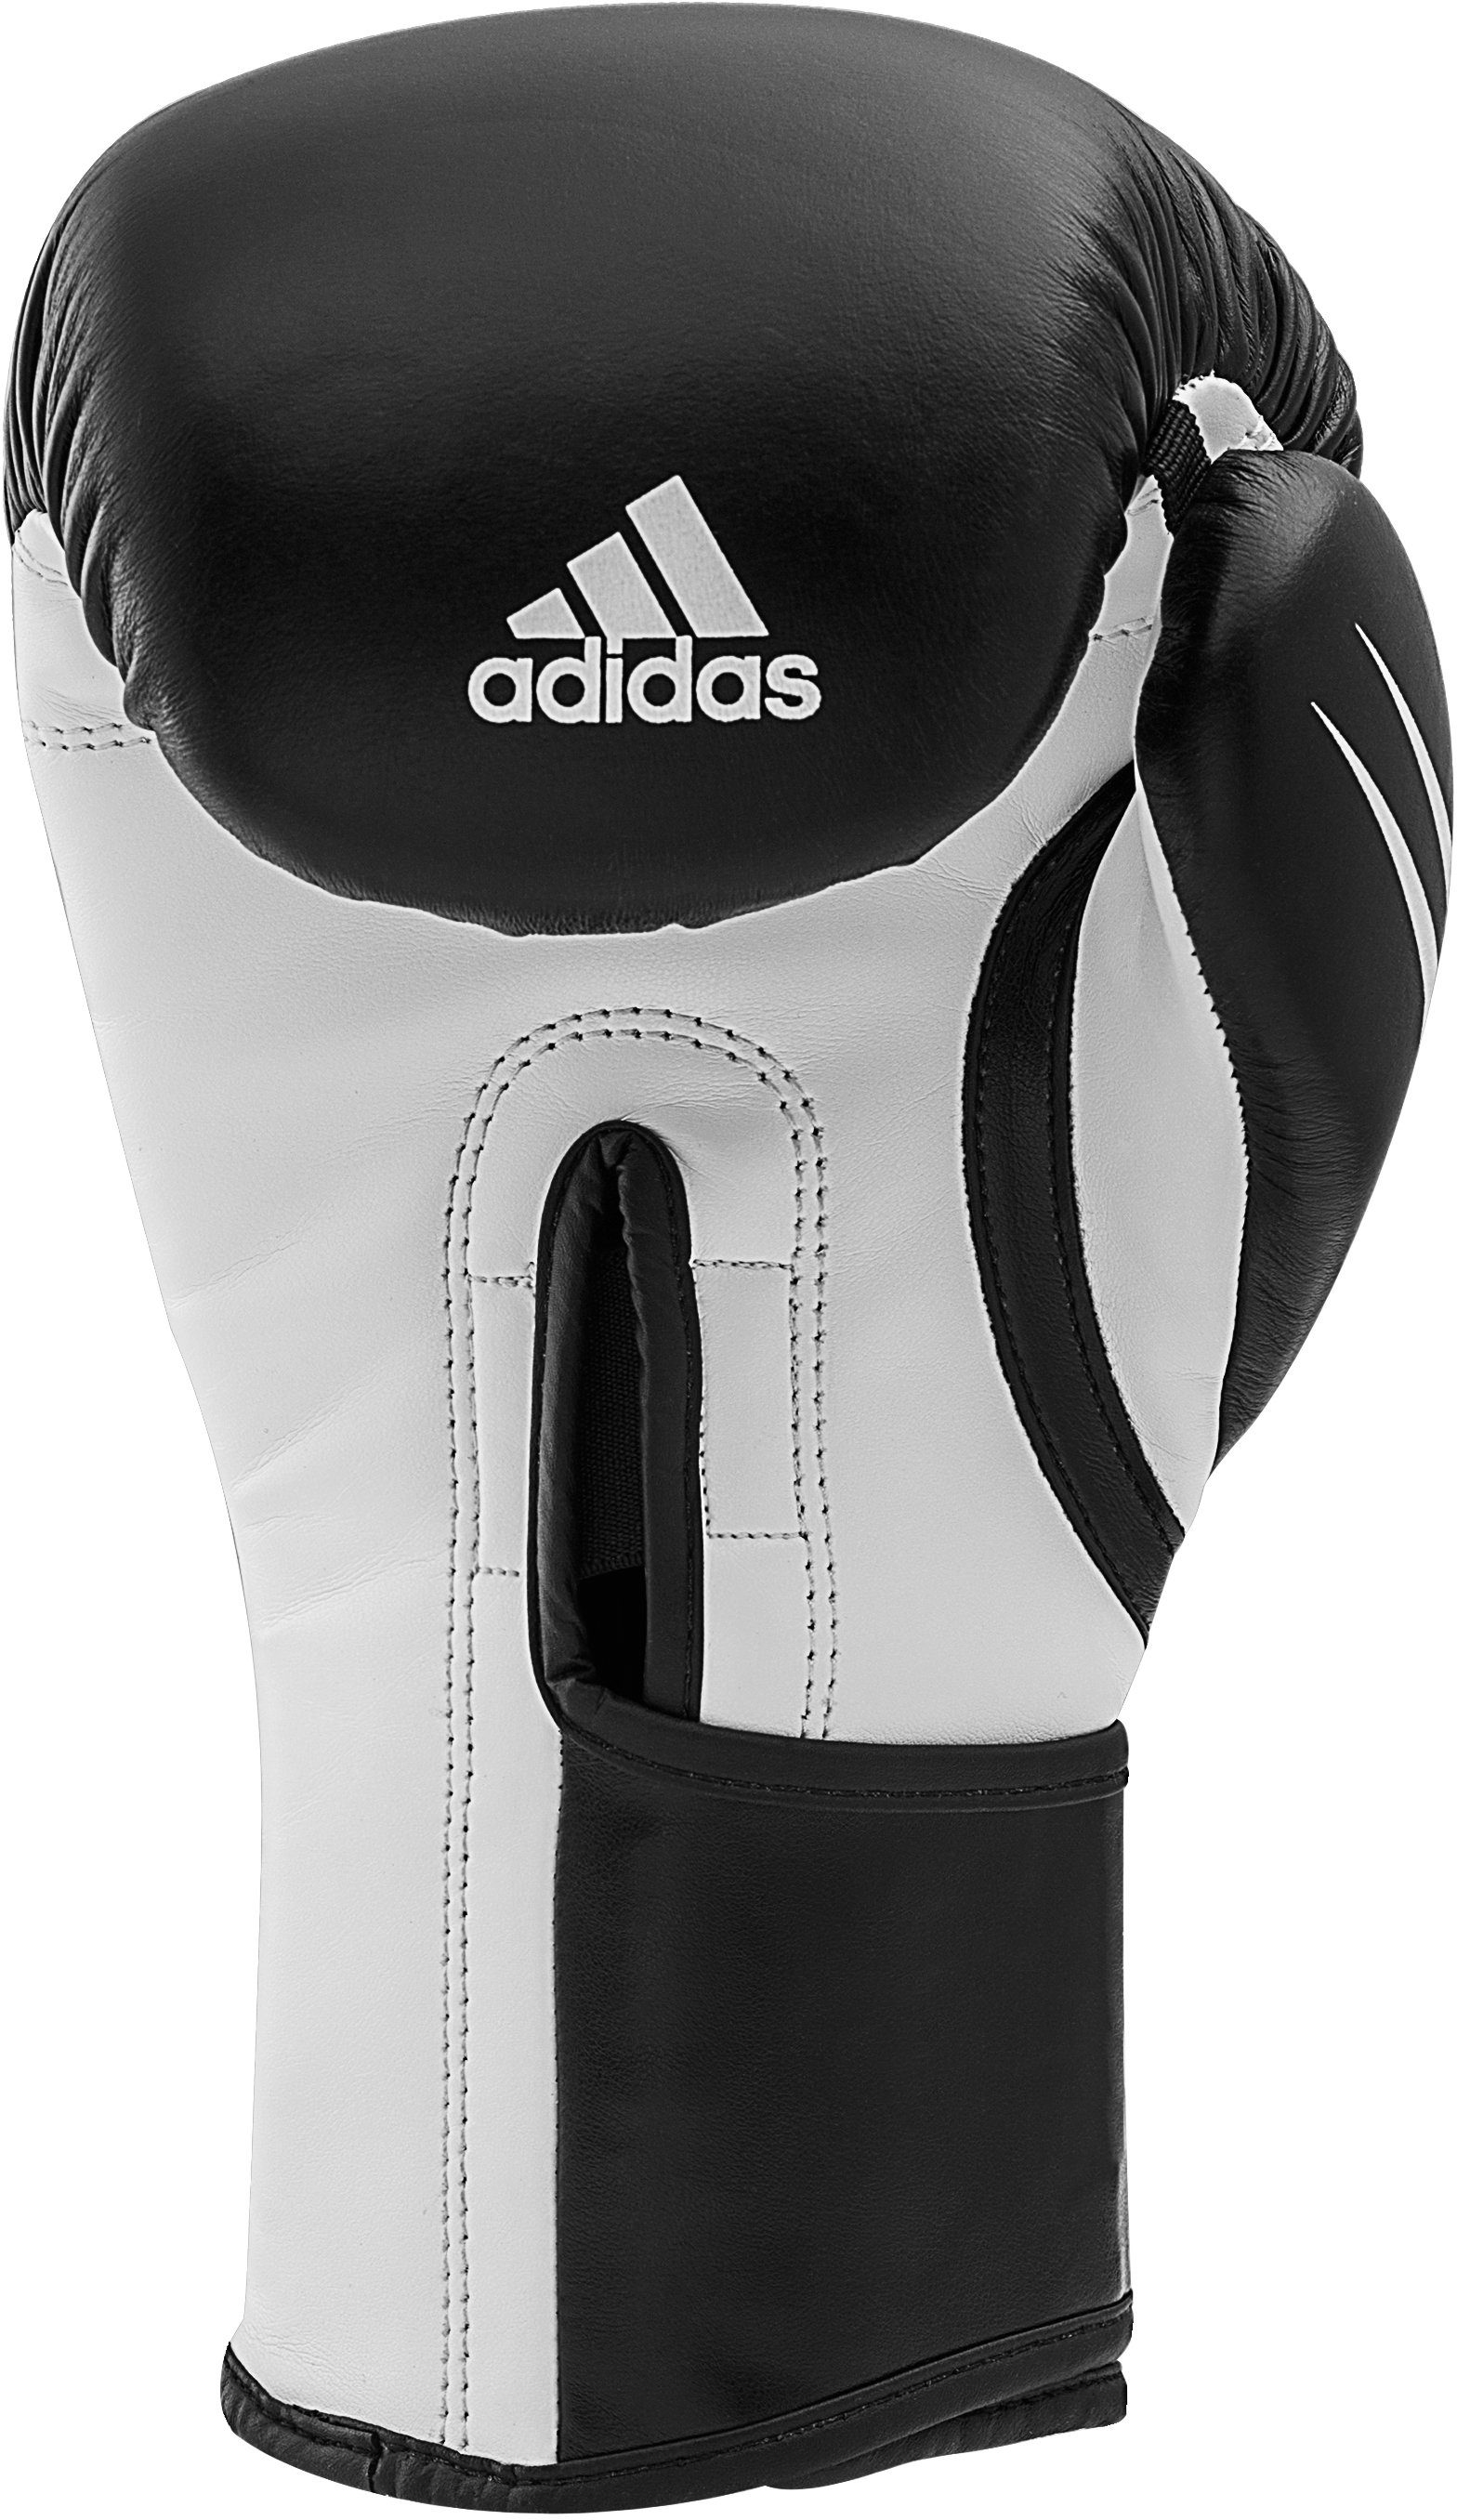 schwarz/weiß Performance Boxhandschuhe adidas